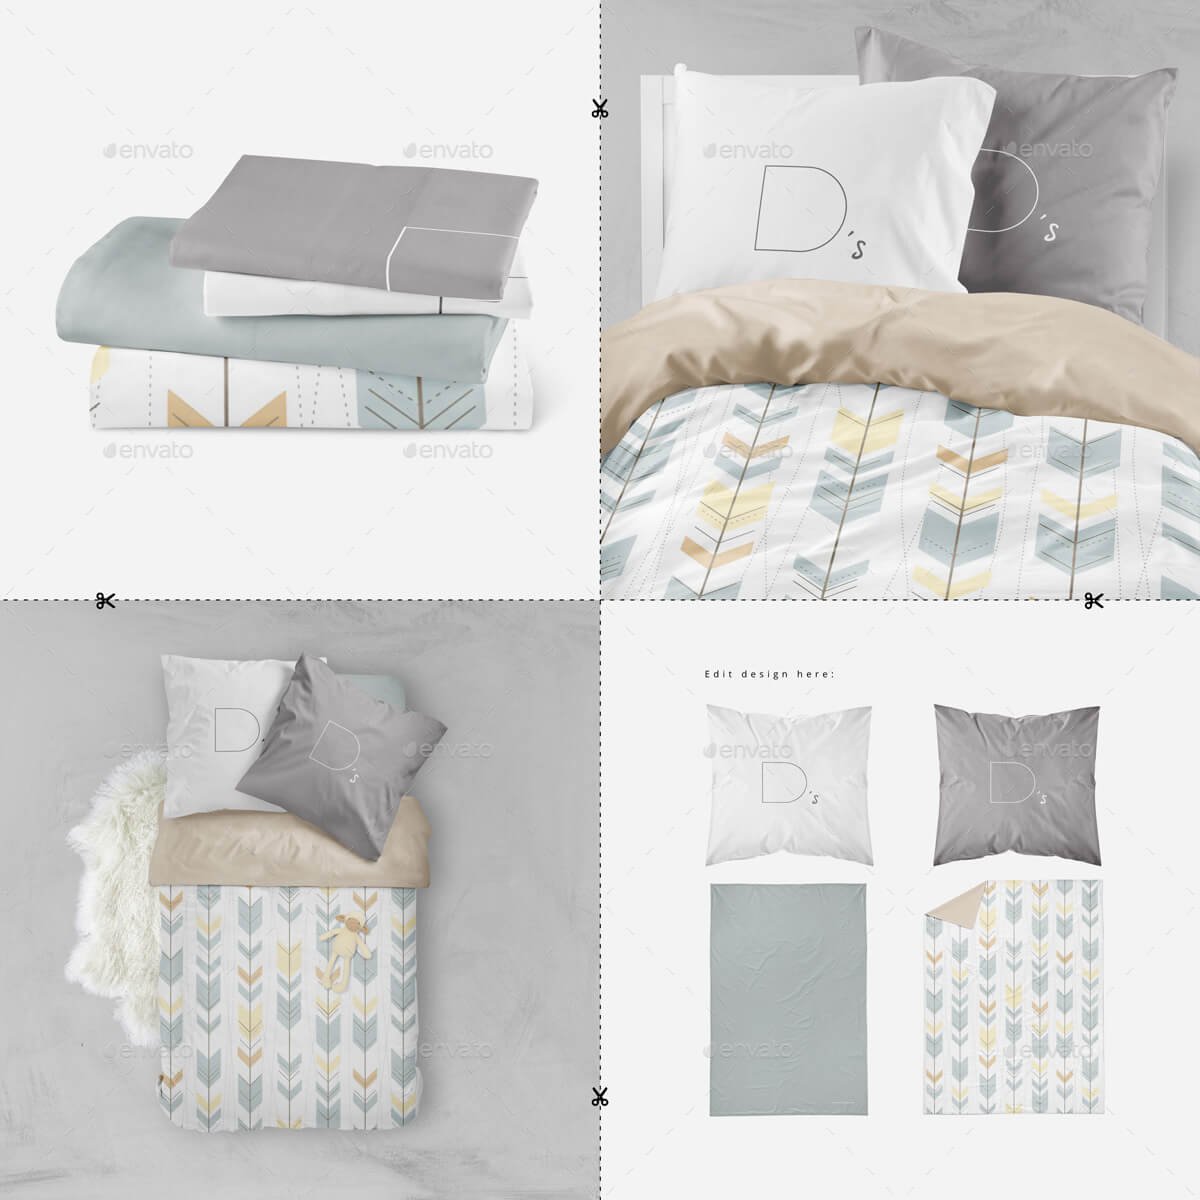 Download 18+ Beautiful Bed Mockup PSD Templates - Mockup Den